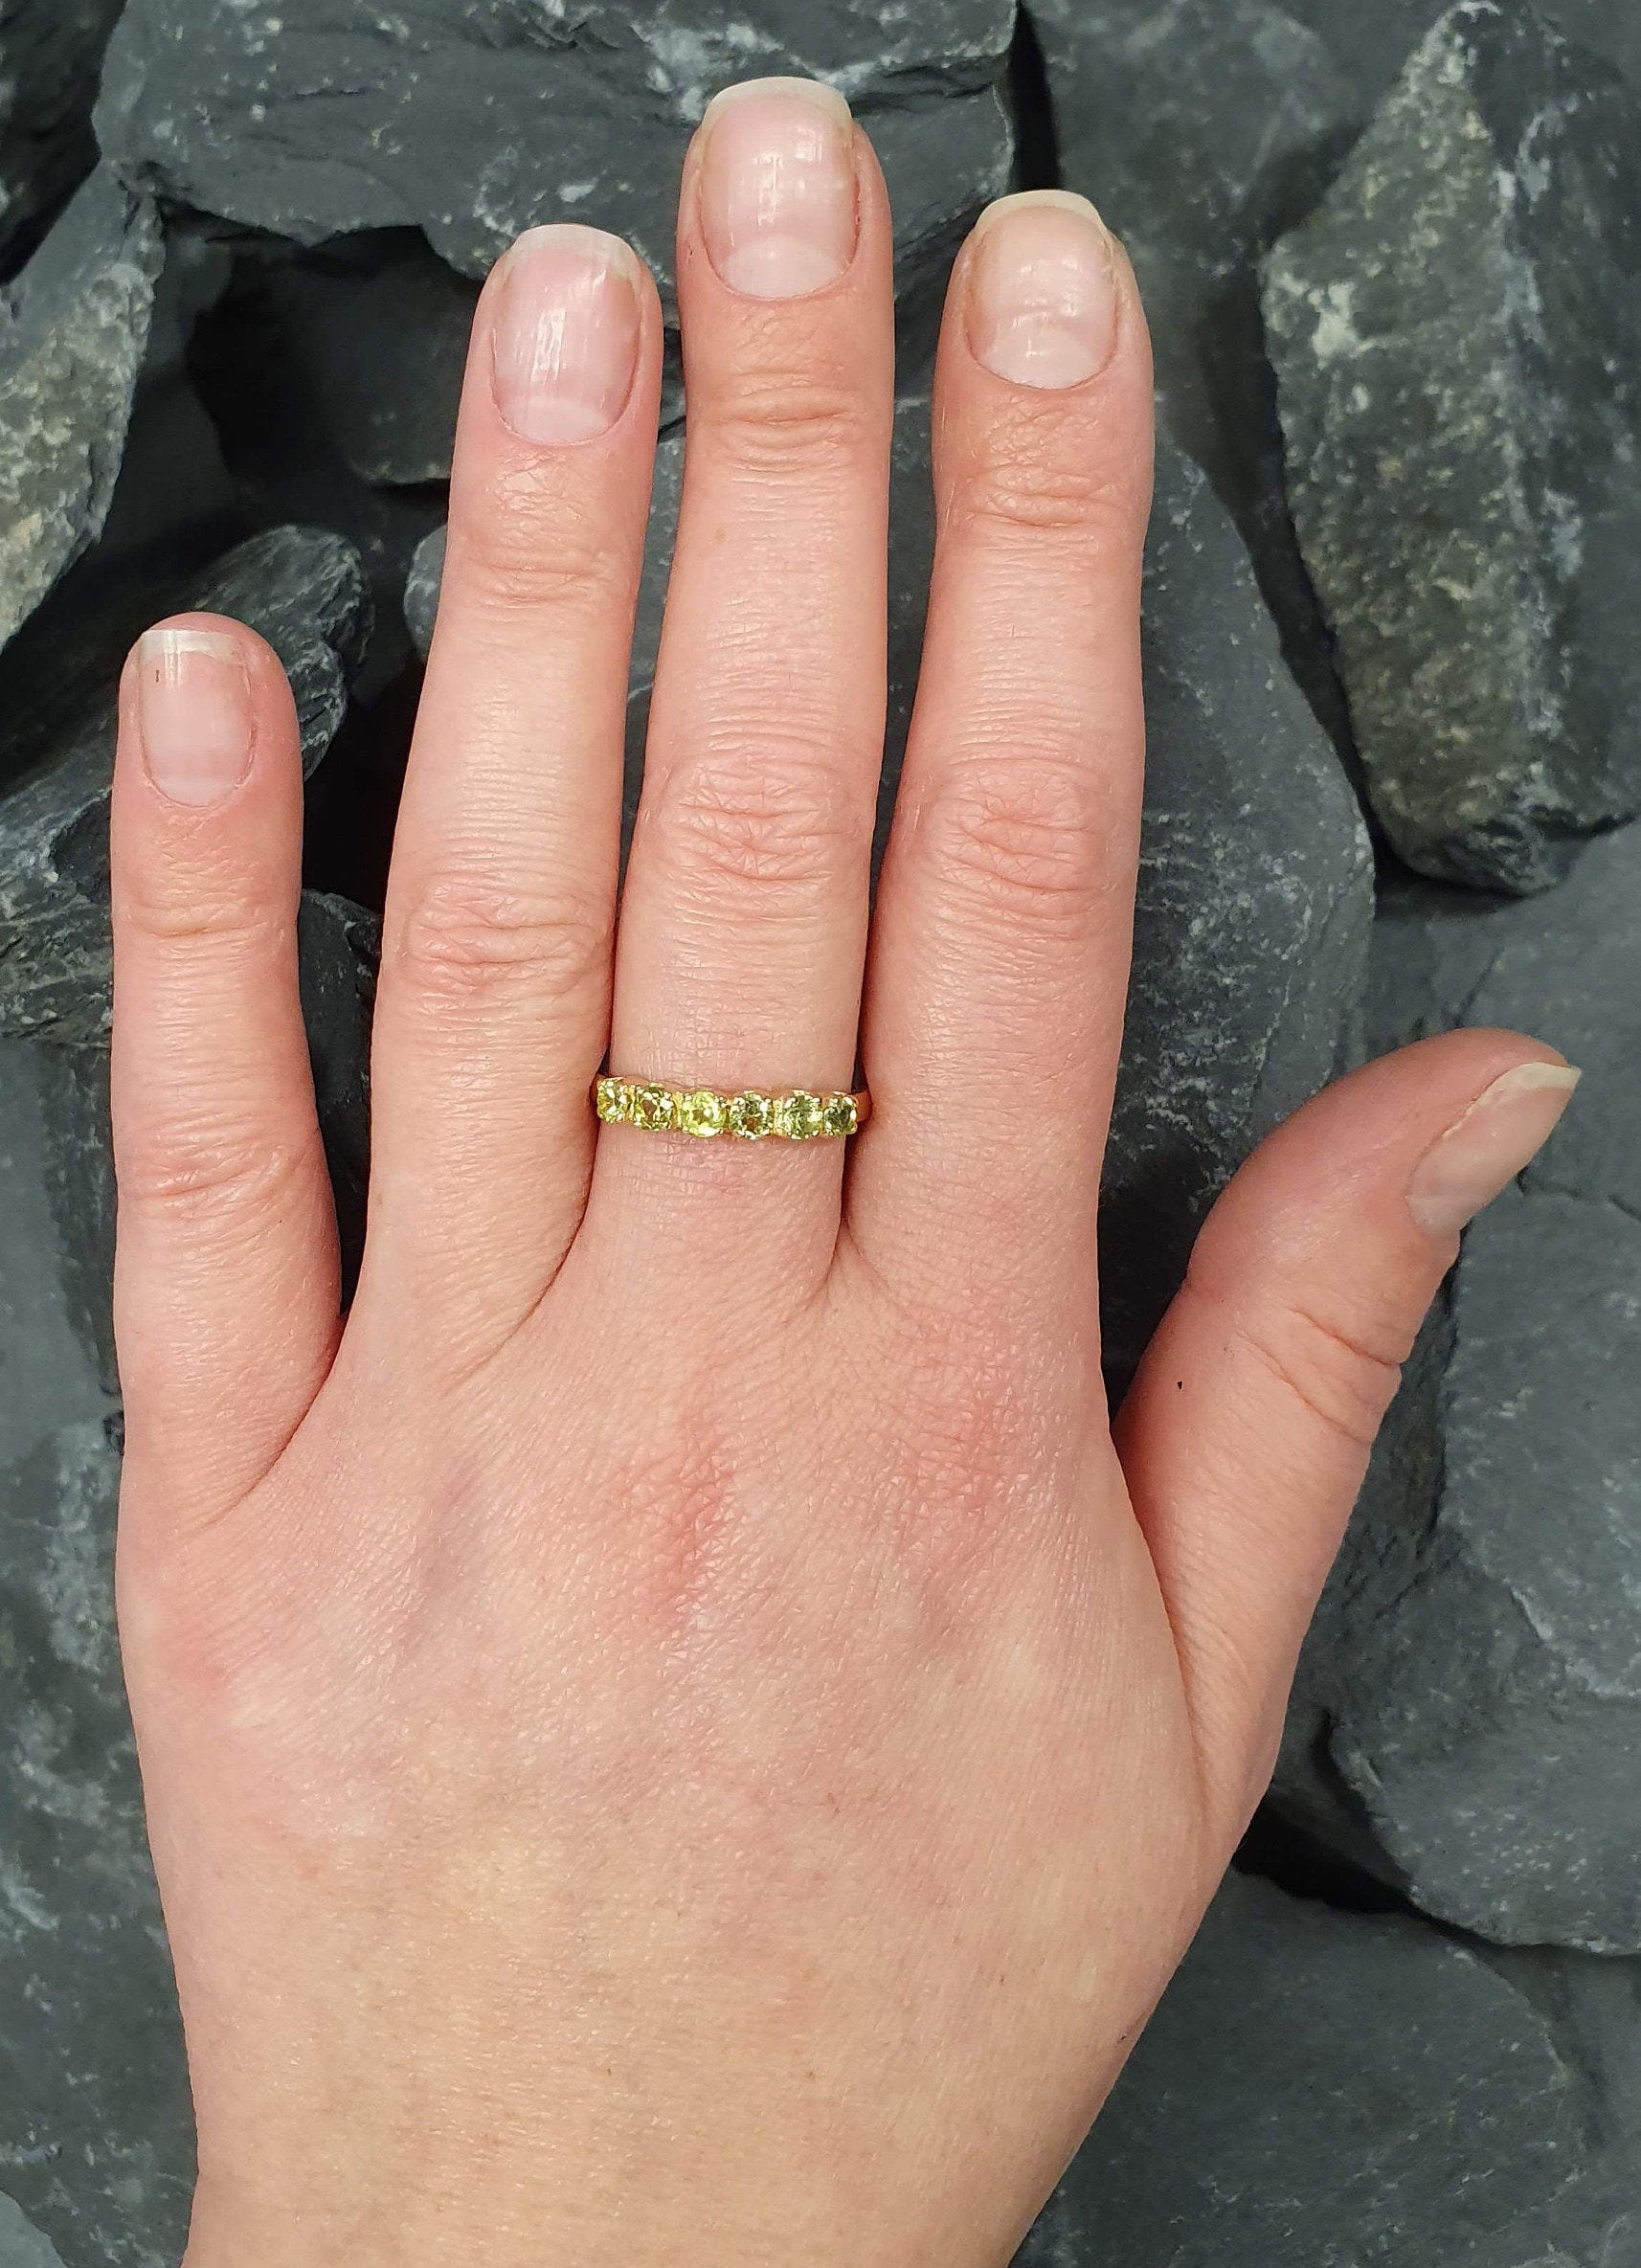 Gold Peridot Ring, Natural Peridot, August Birthstone, Half Eternity Ring, Green Diamond Ring, Vintage Ring, Green Ring, Solid Silver Ring